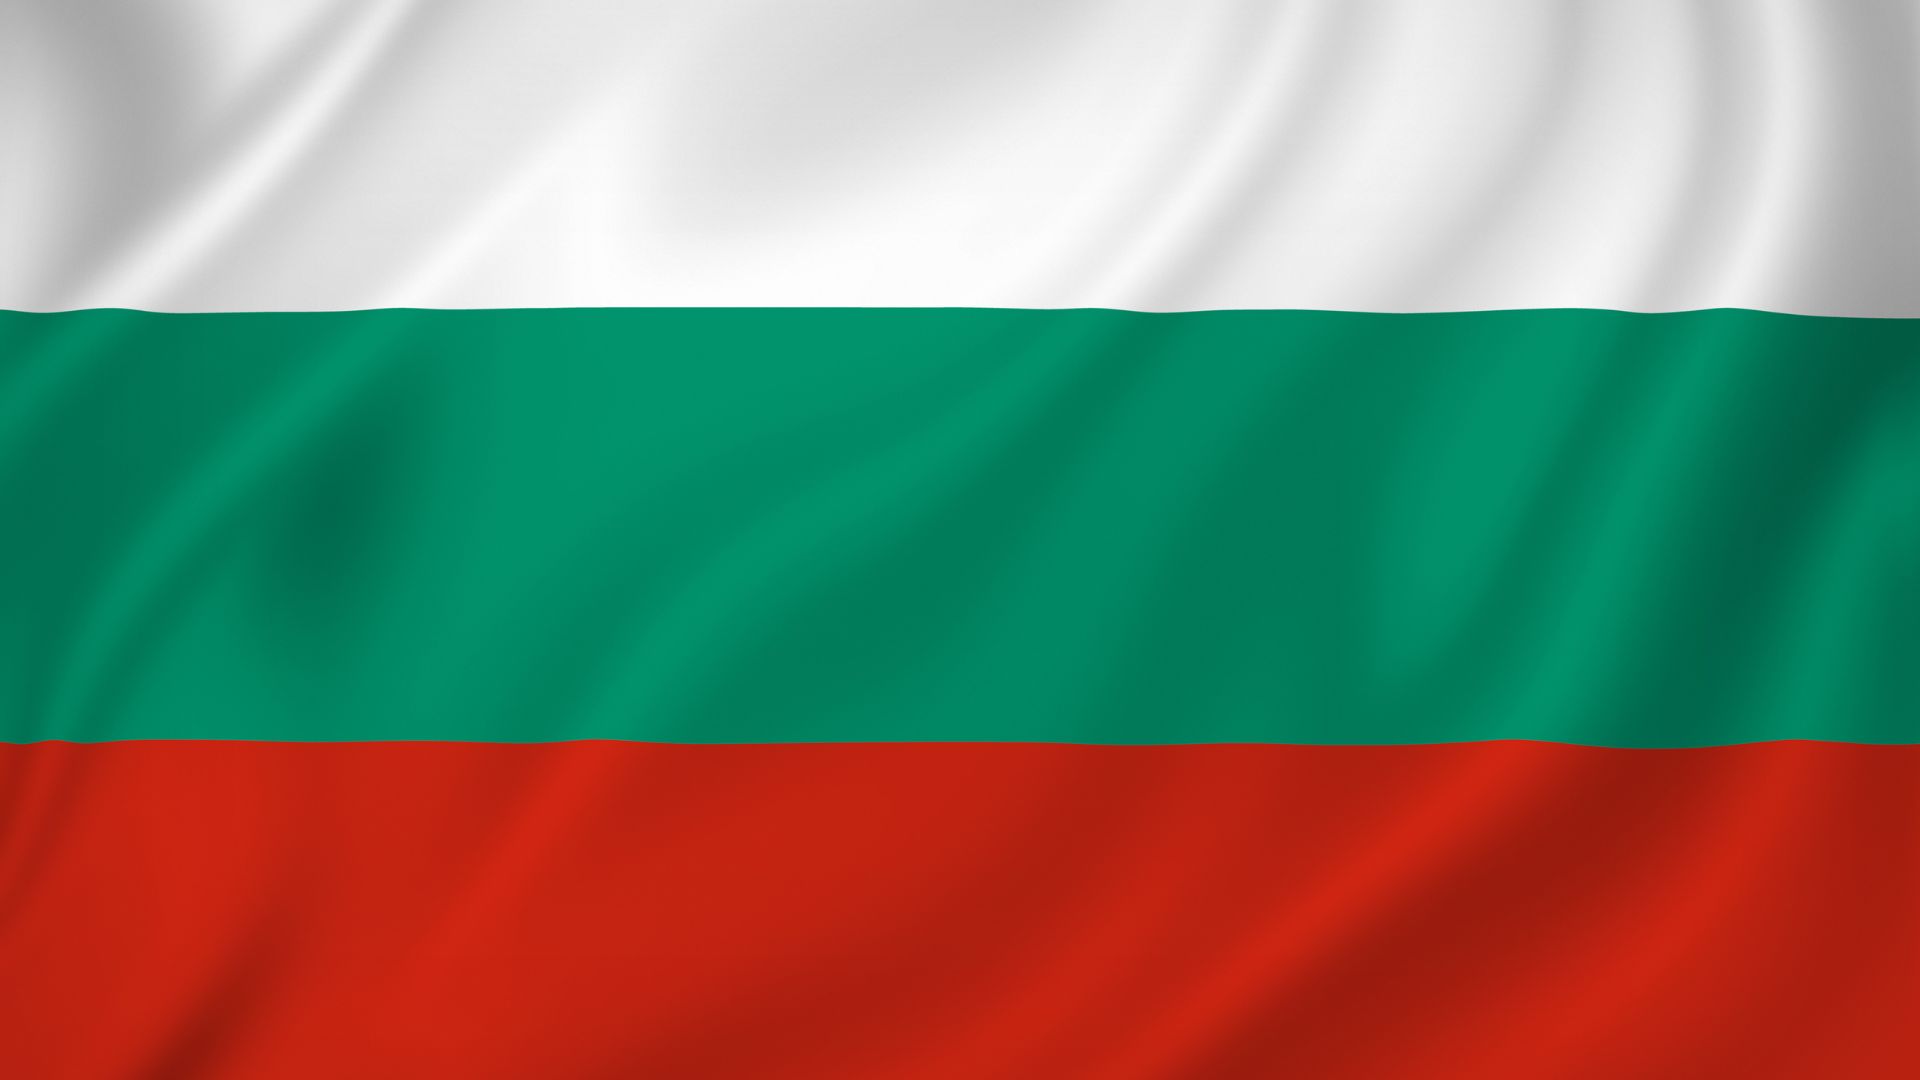 Online Gambling License in Bulgaria